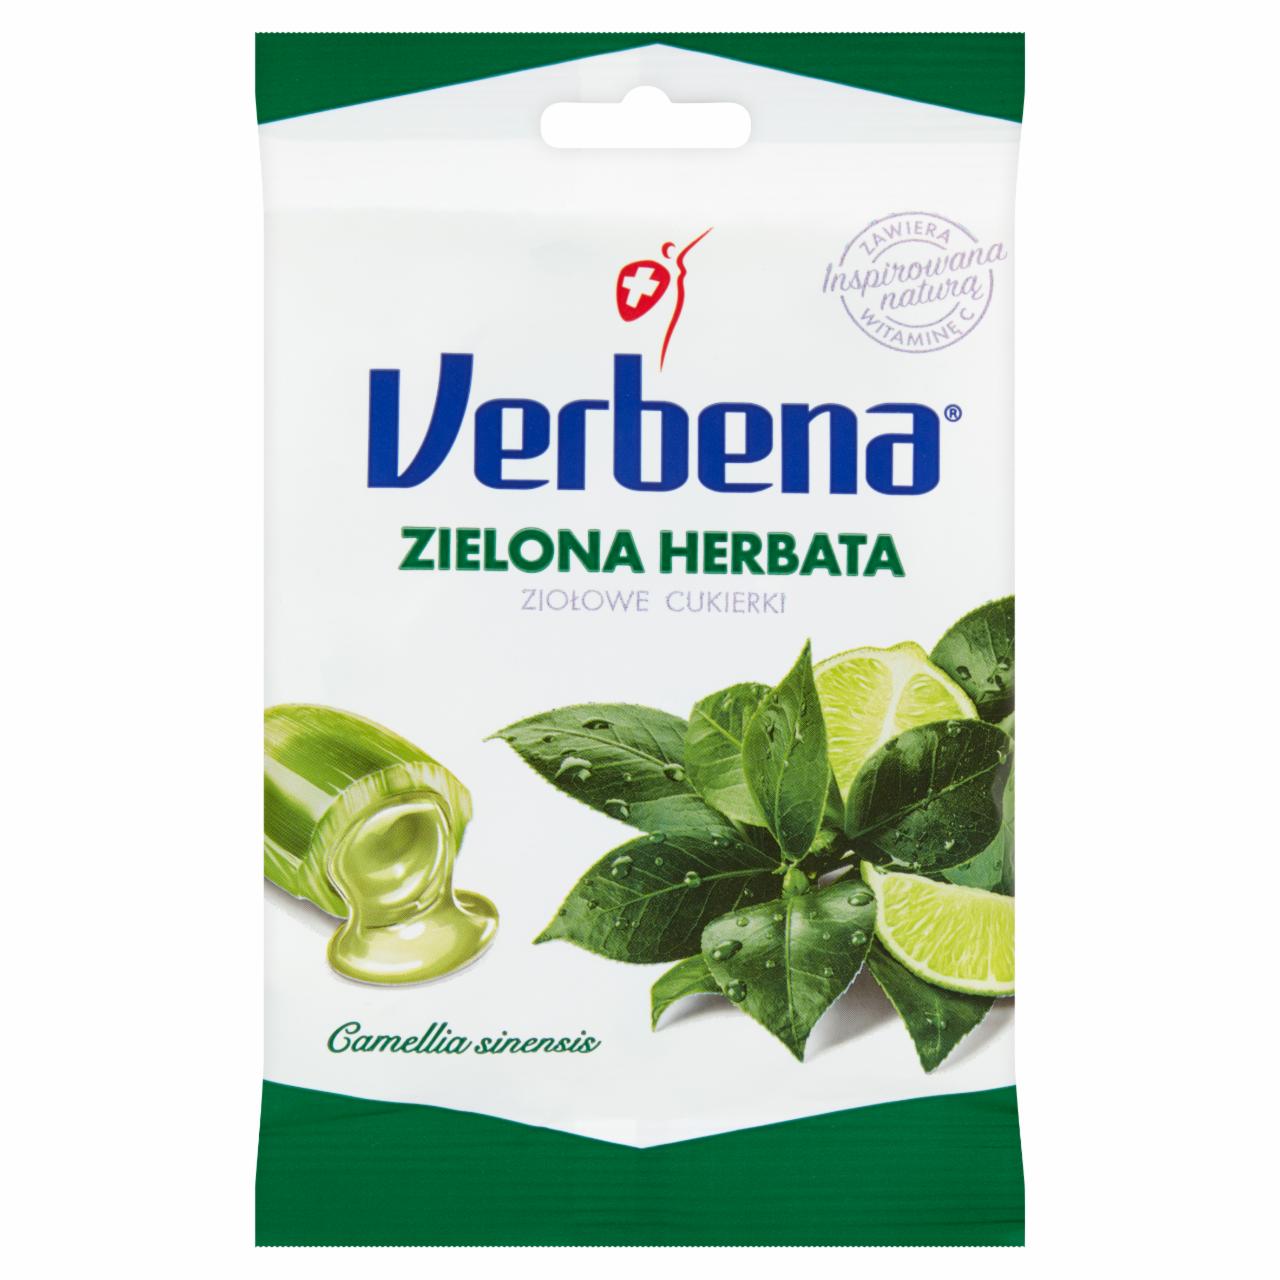 Zdjęcia - Verbena Zielona herbata Ziołowe cukierki 60 g